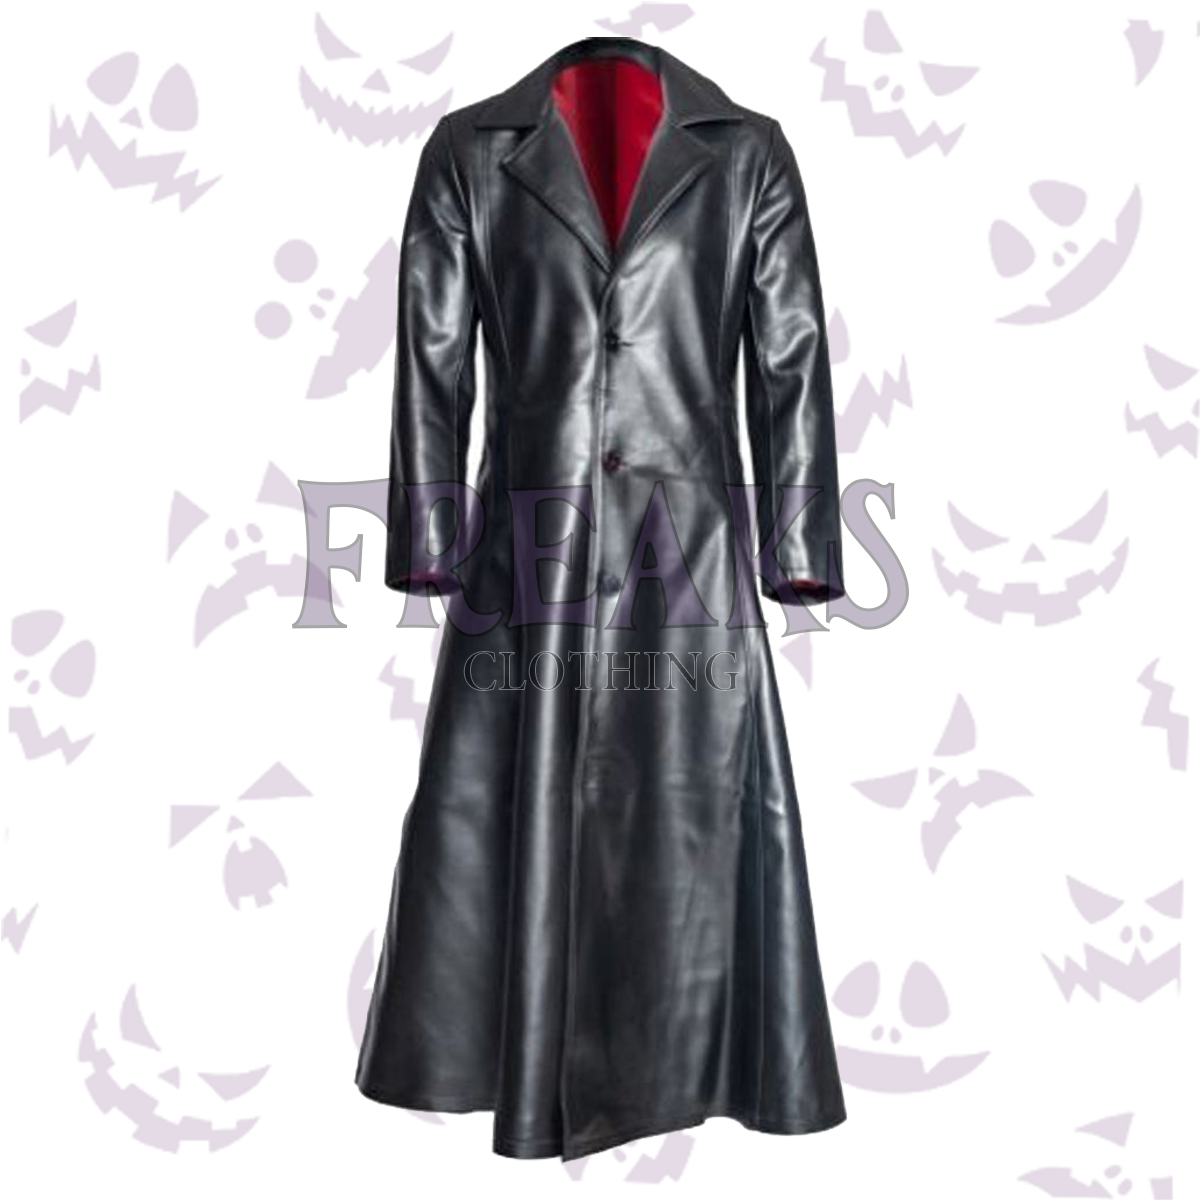 Vampire Black Long PVC Leather Gothic Coat Men